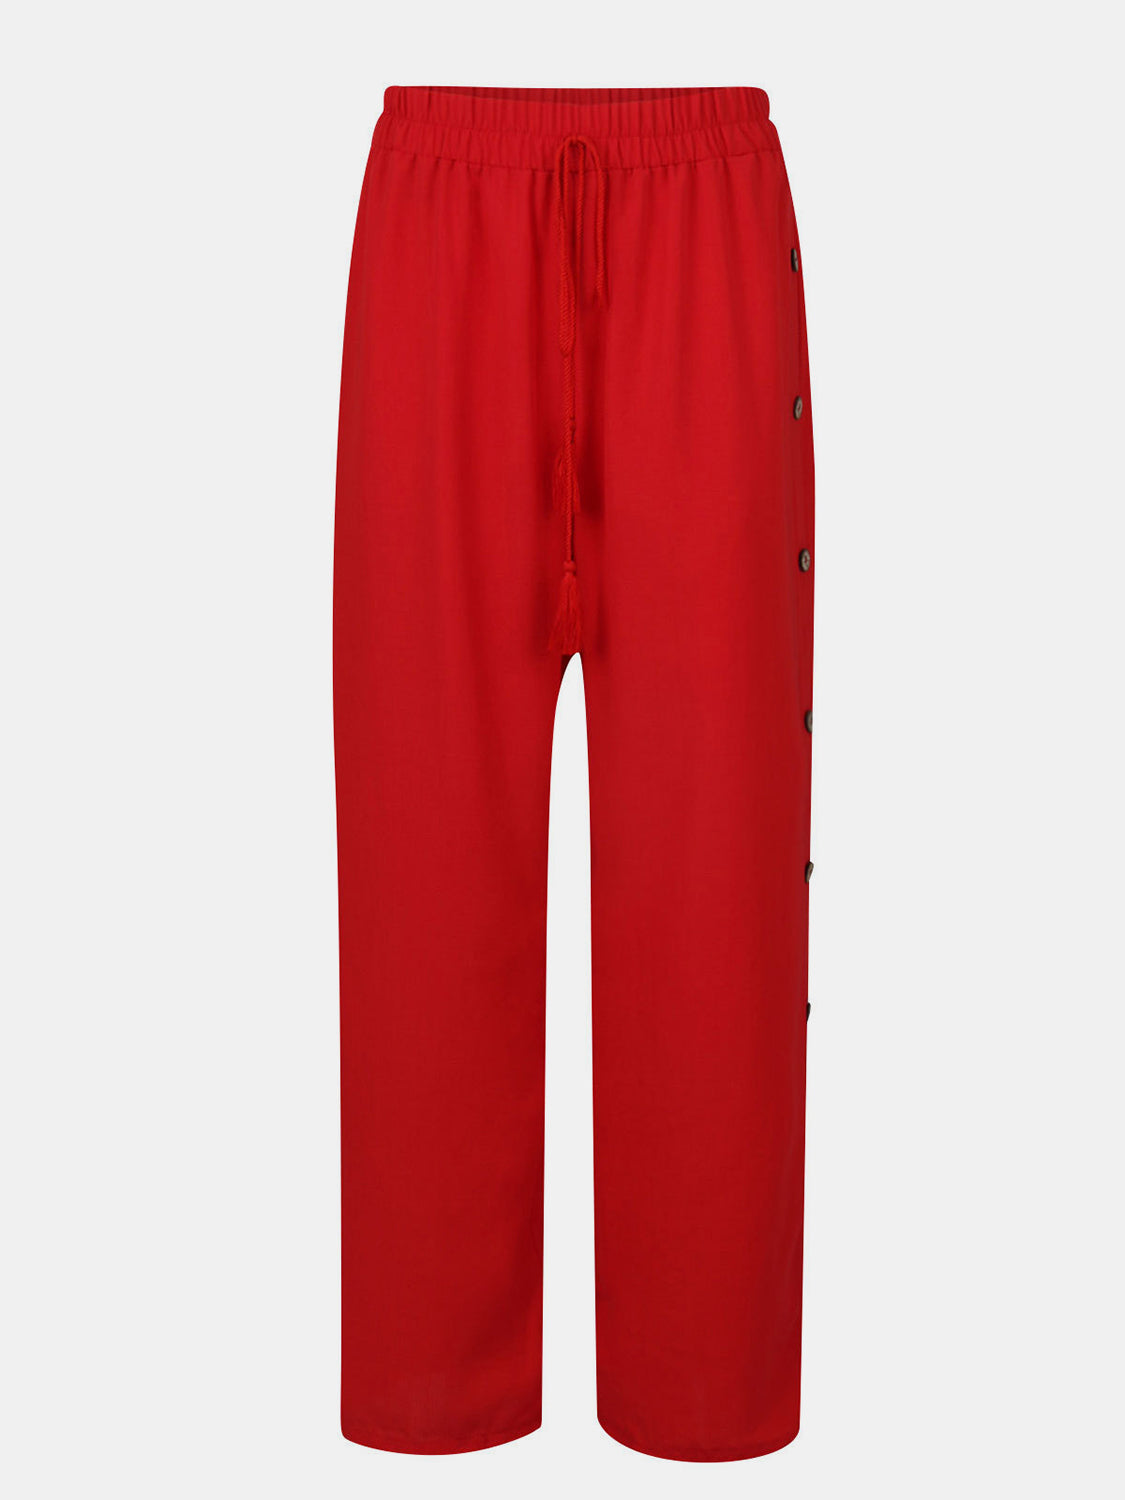 TEEK - Full Size Tassel Wide Leg Pants PANTS TEEK Trend Red S 